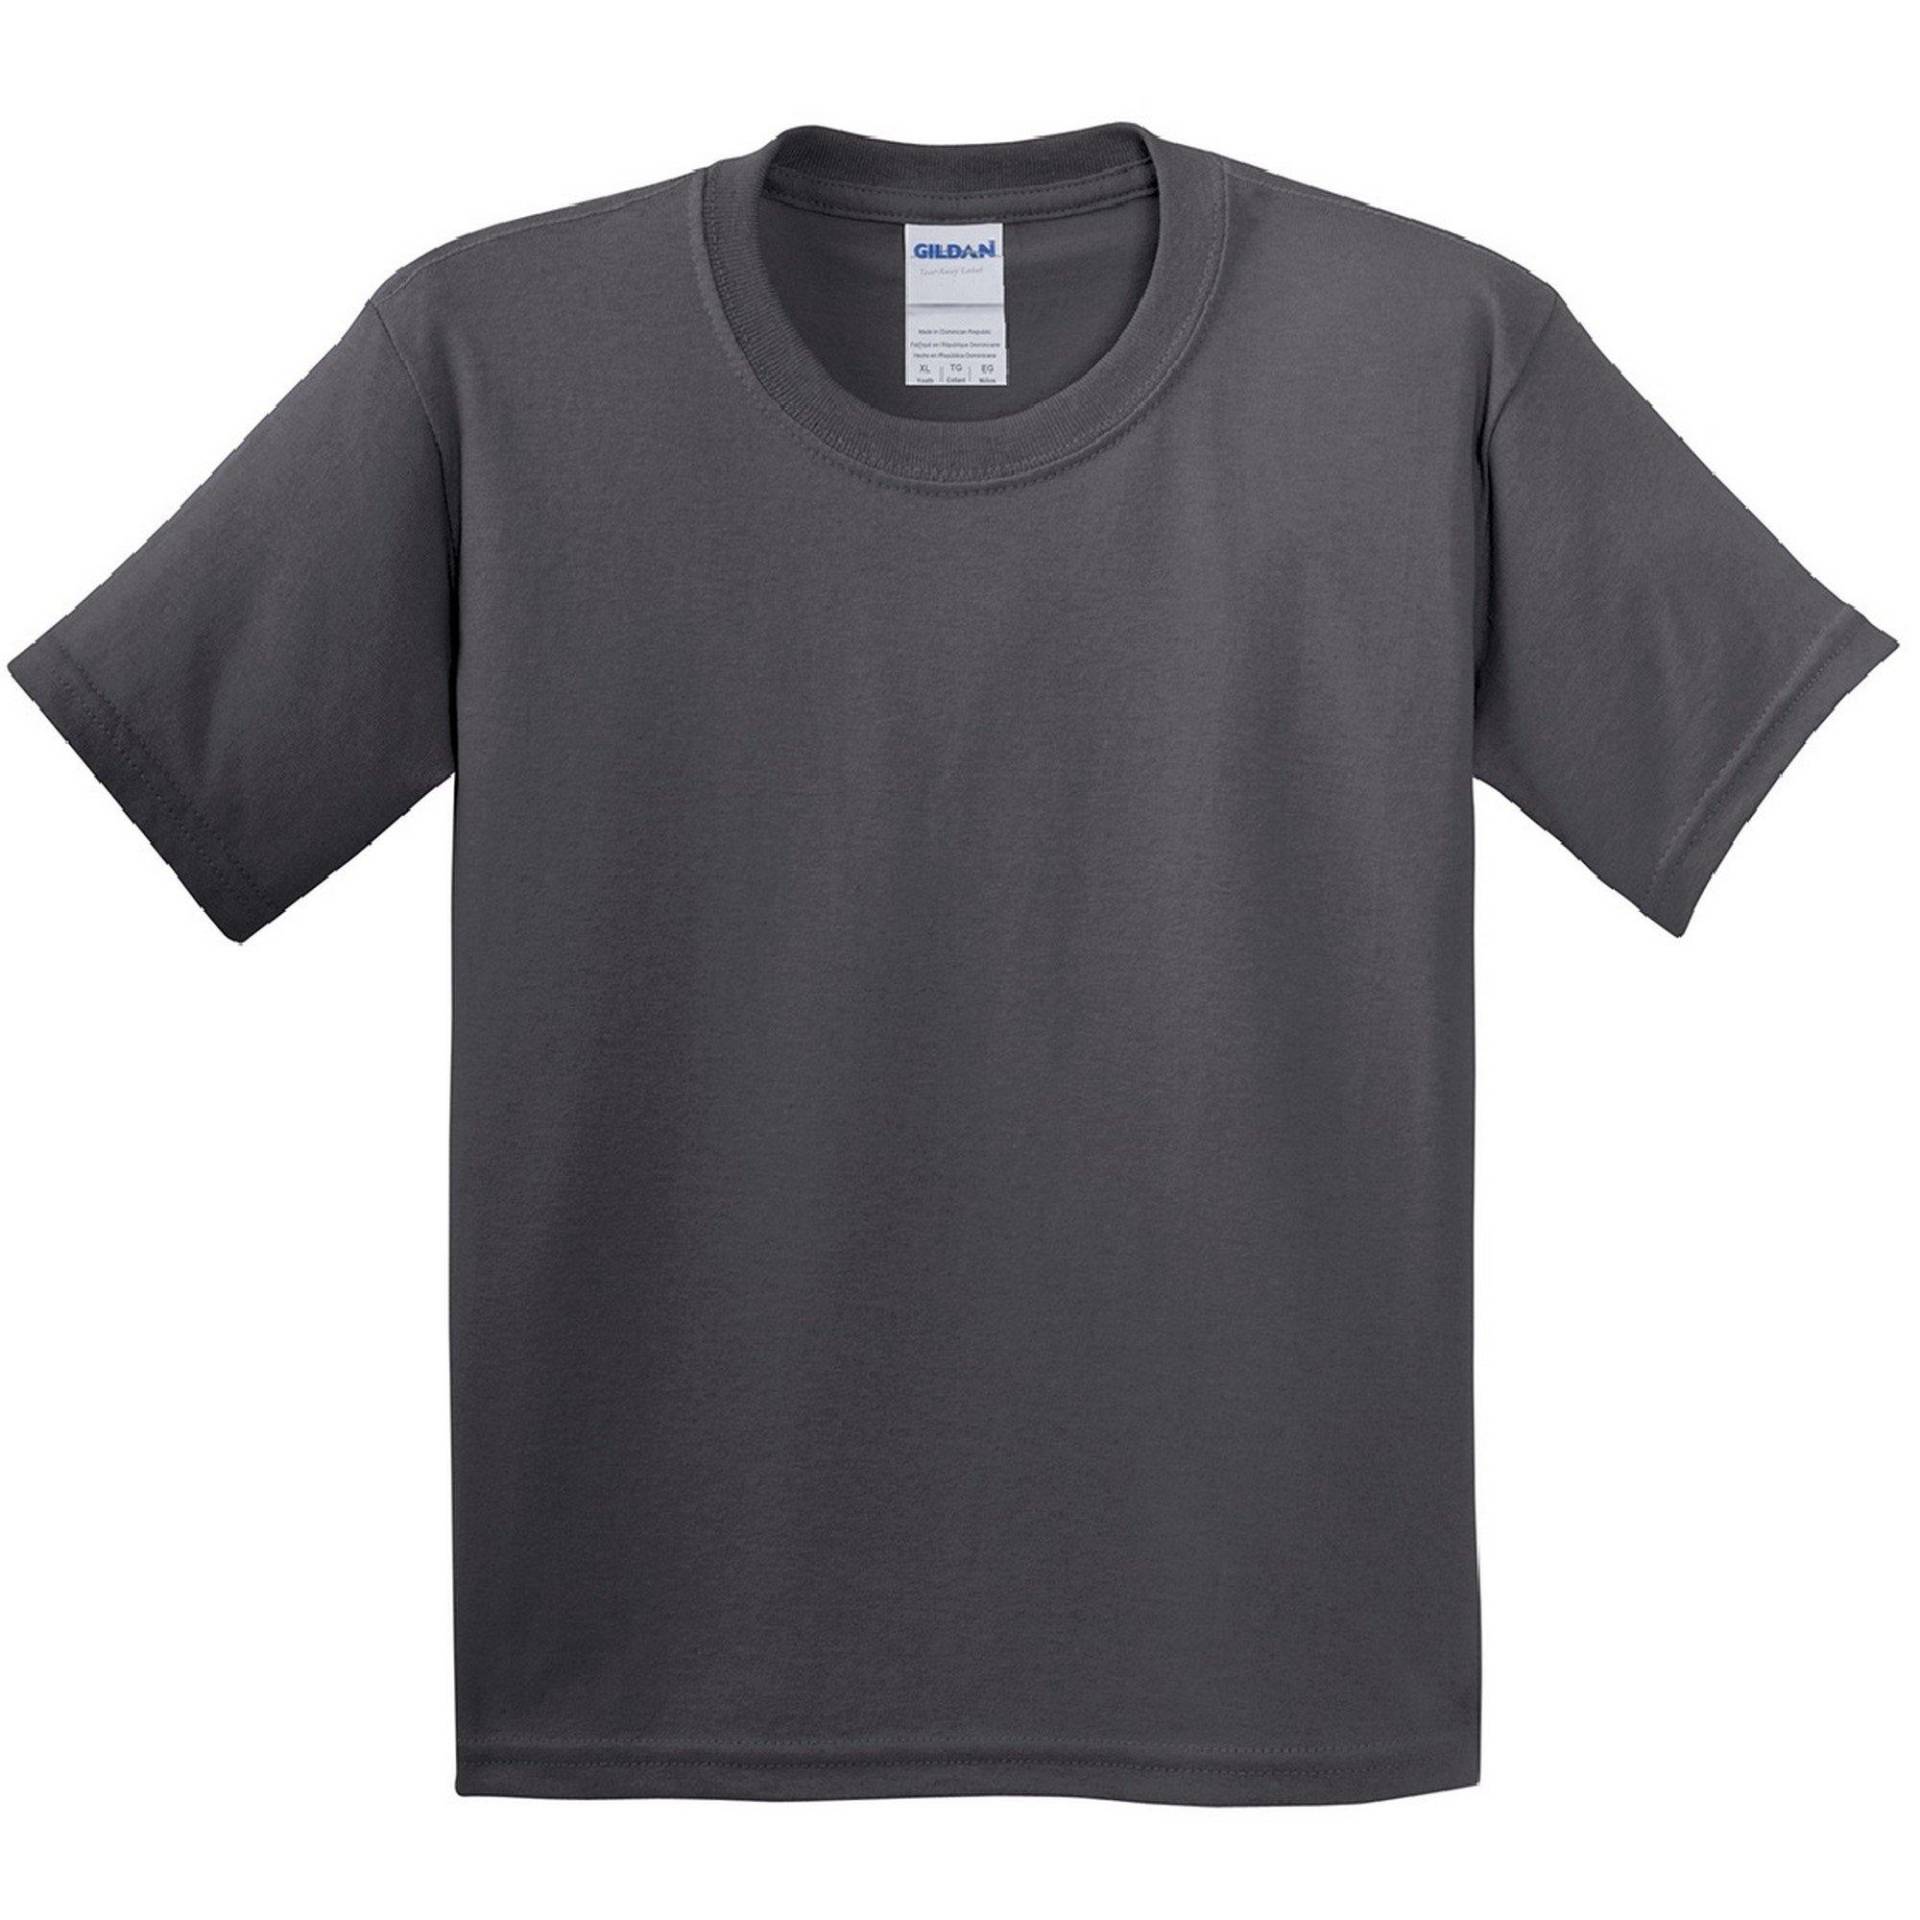 Tshirt (2 Stückpackung) Jungen Charcoal Black S von Gildan